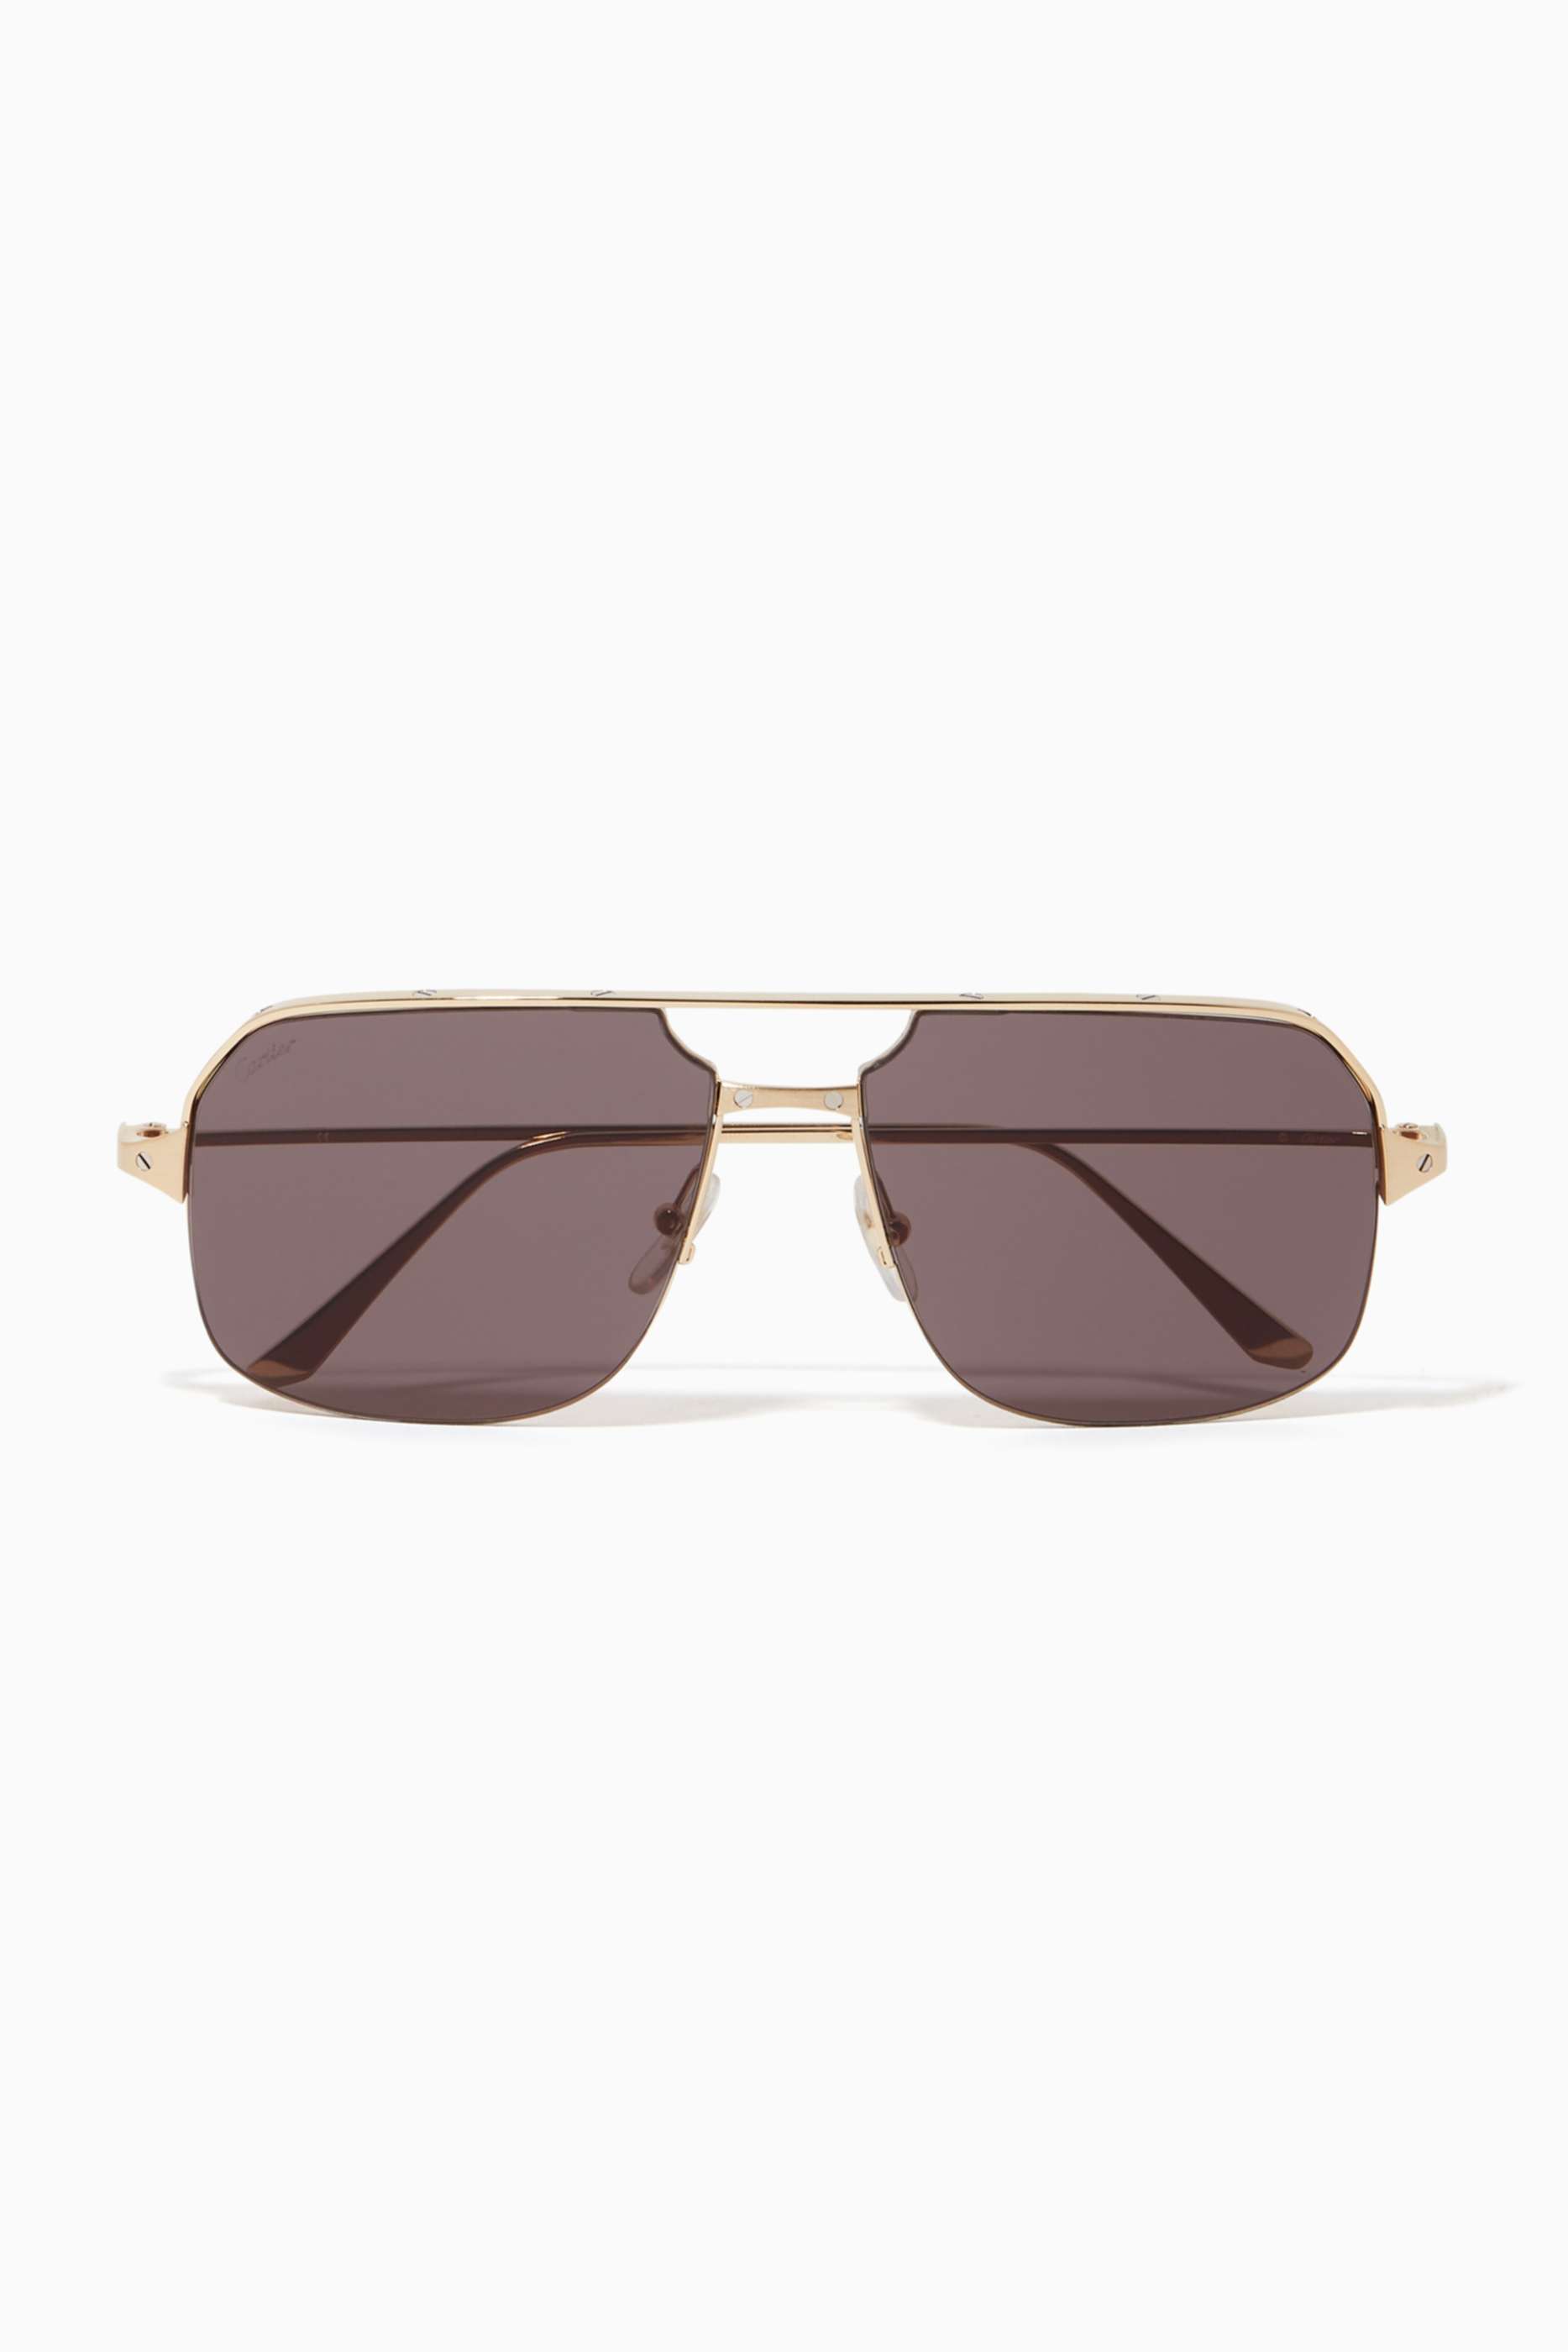 cartier sunglasses in dubai